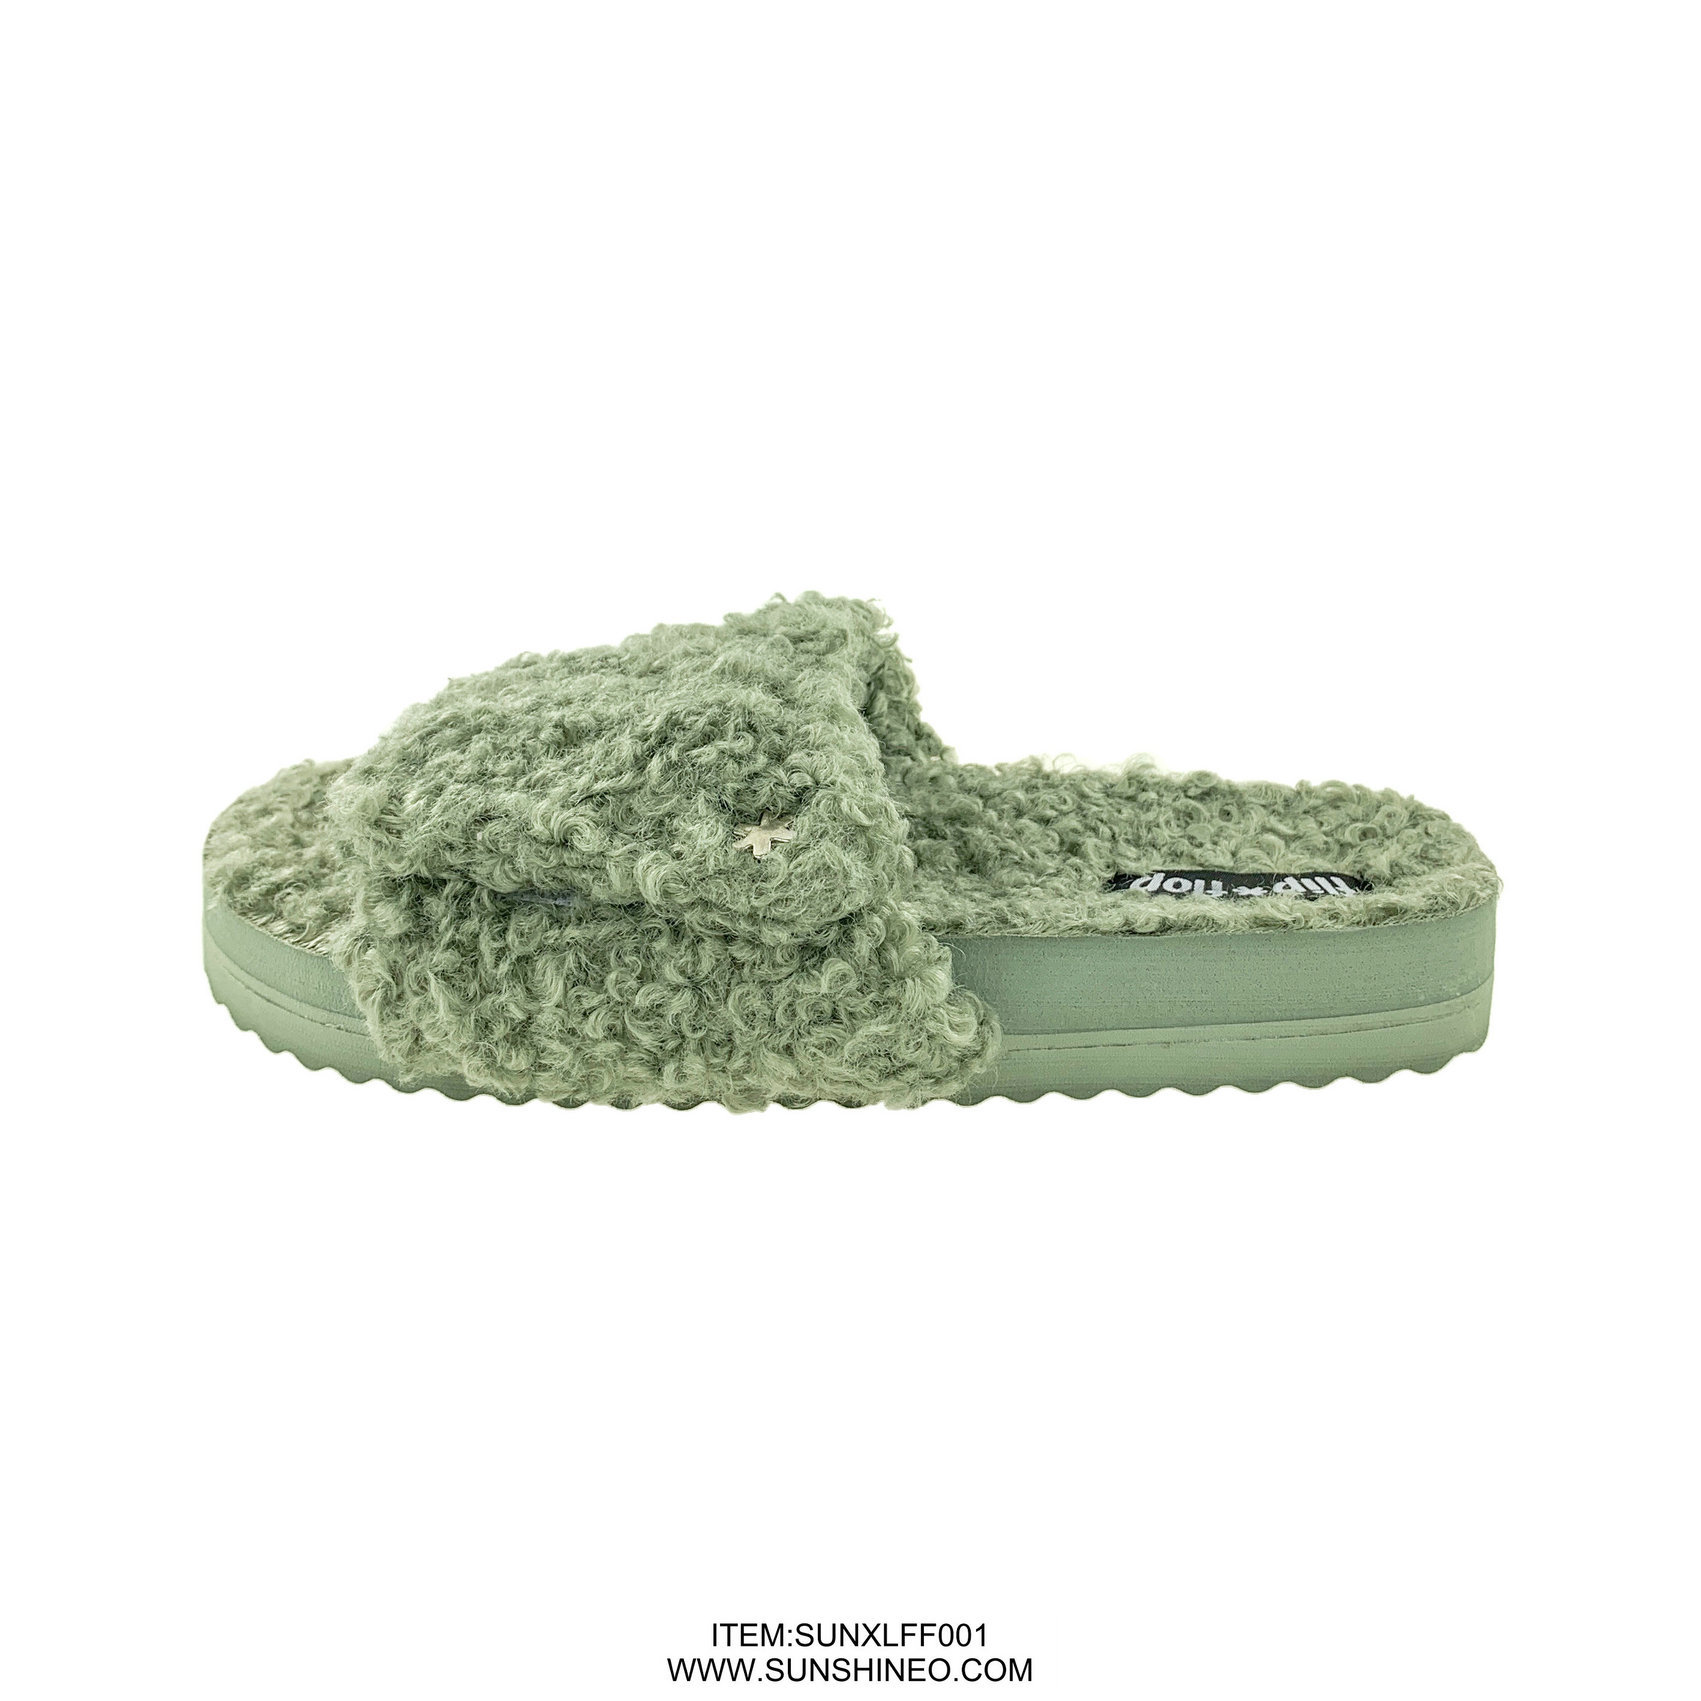 SUNXLFF001 fur flip flop sandals winter slippers